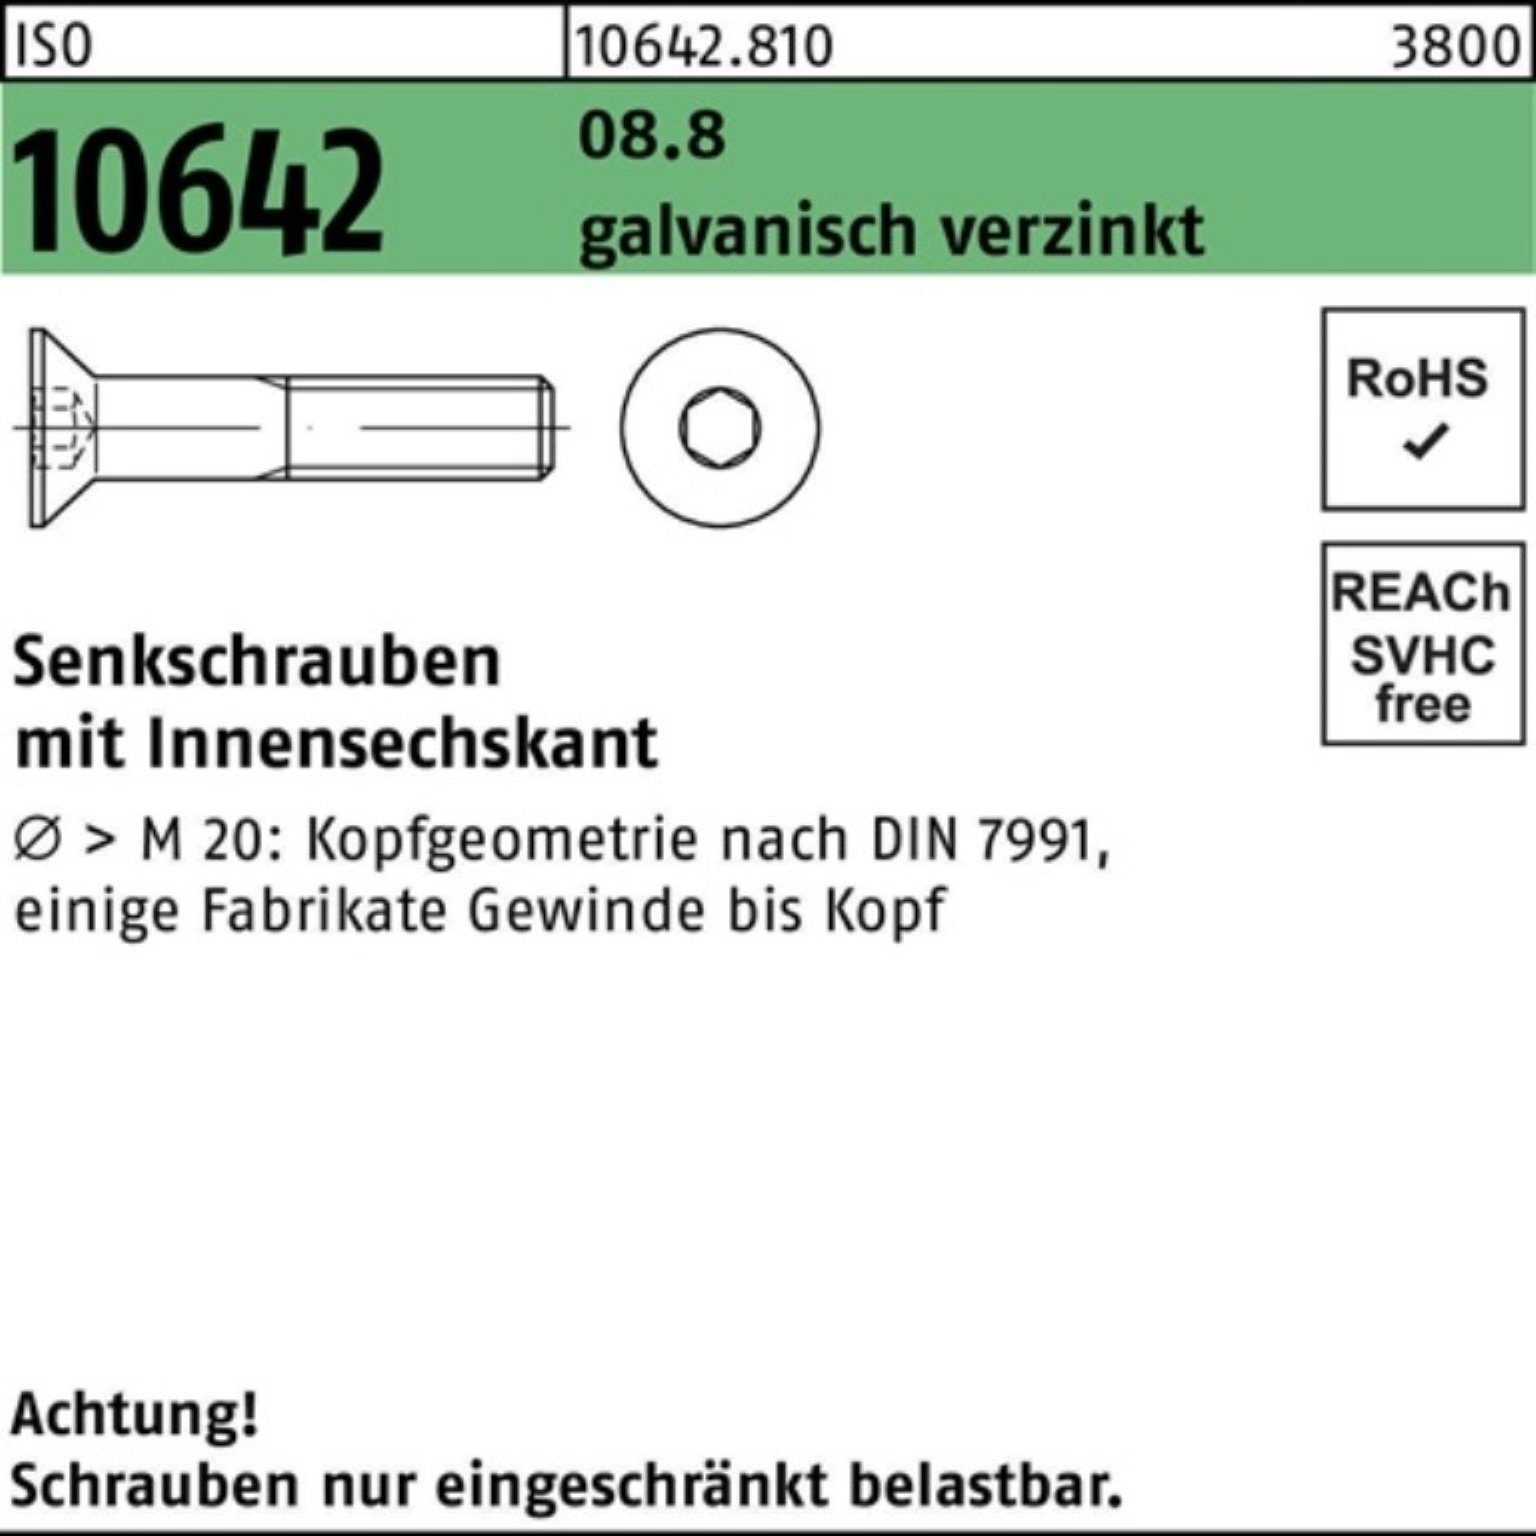 ISO Senkschraube 60 M6x Senkschraube 8.8 10642 galv.verz. Reyher 200er Innen-6kt Pack 200